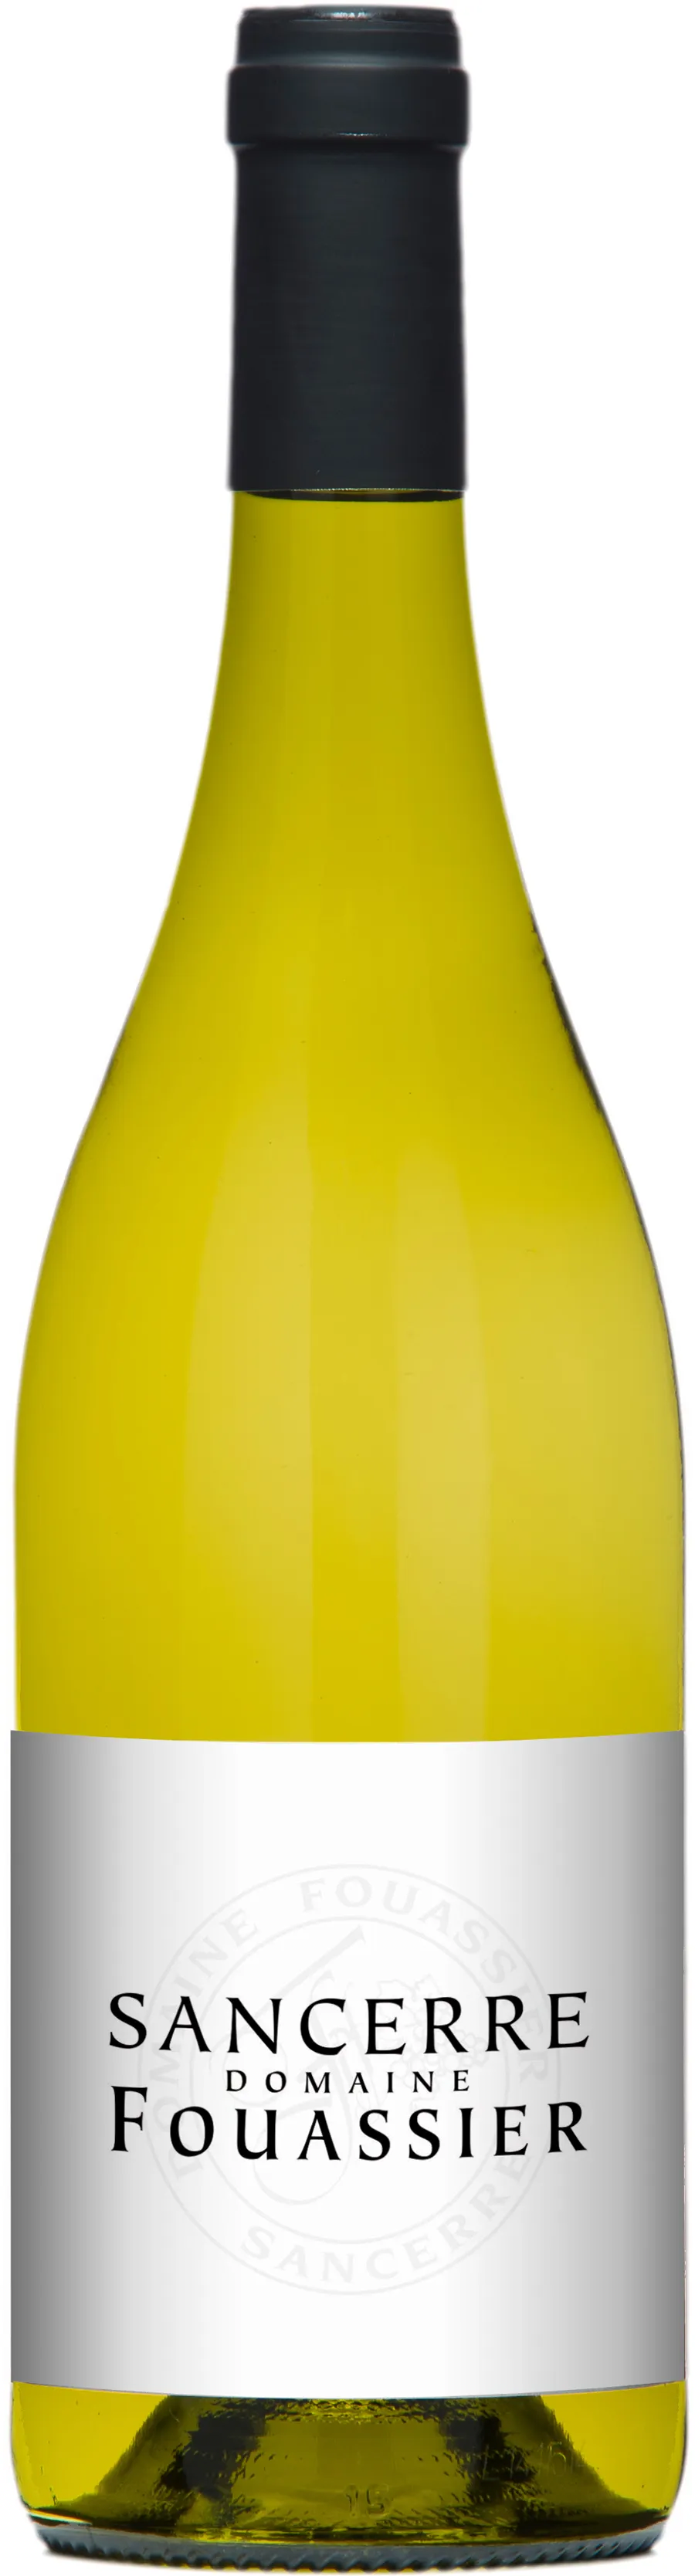 Bottle of Domaine Fouassier Sancerrewith label visible